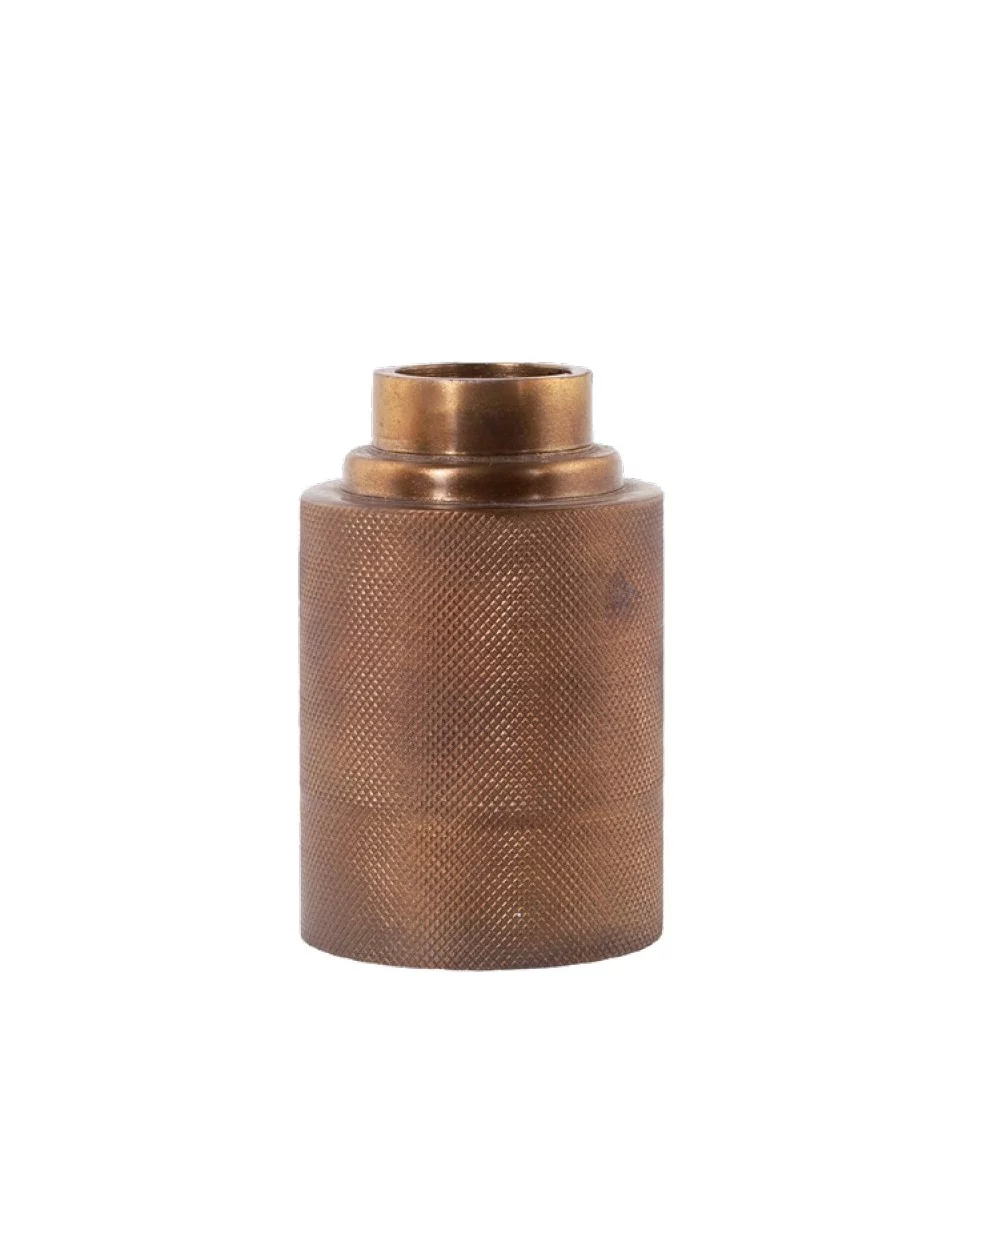 Obojstranný kovový svietnik RAW antique brass L